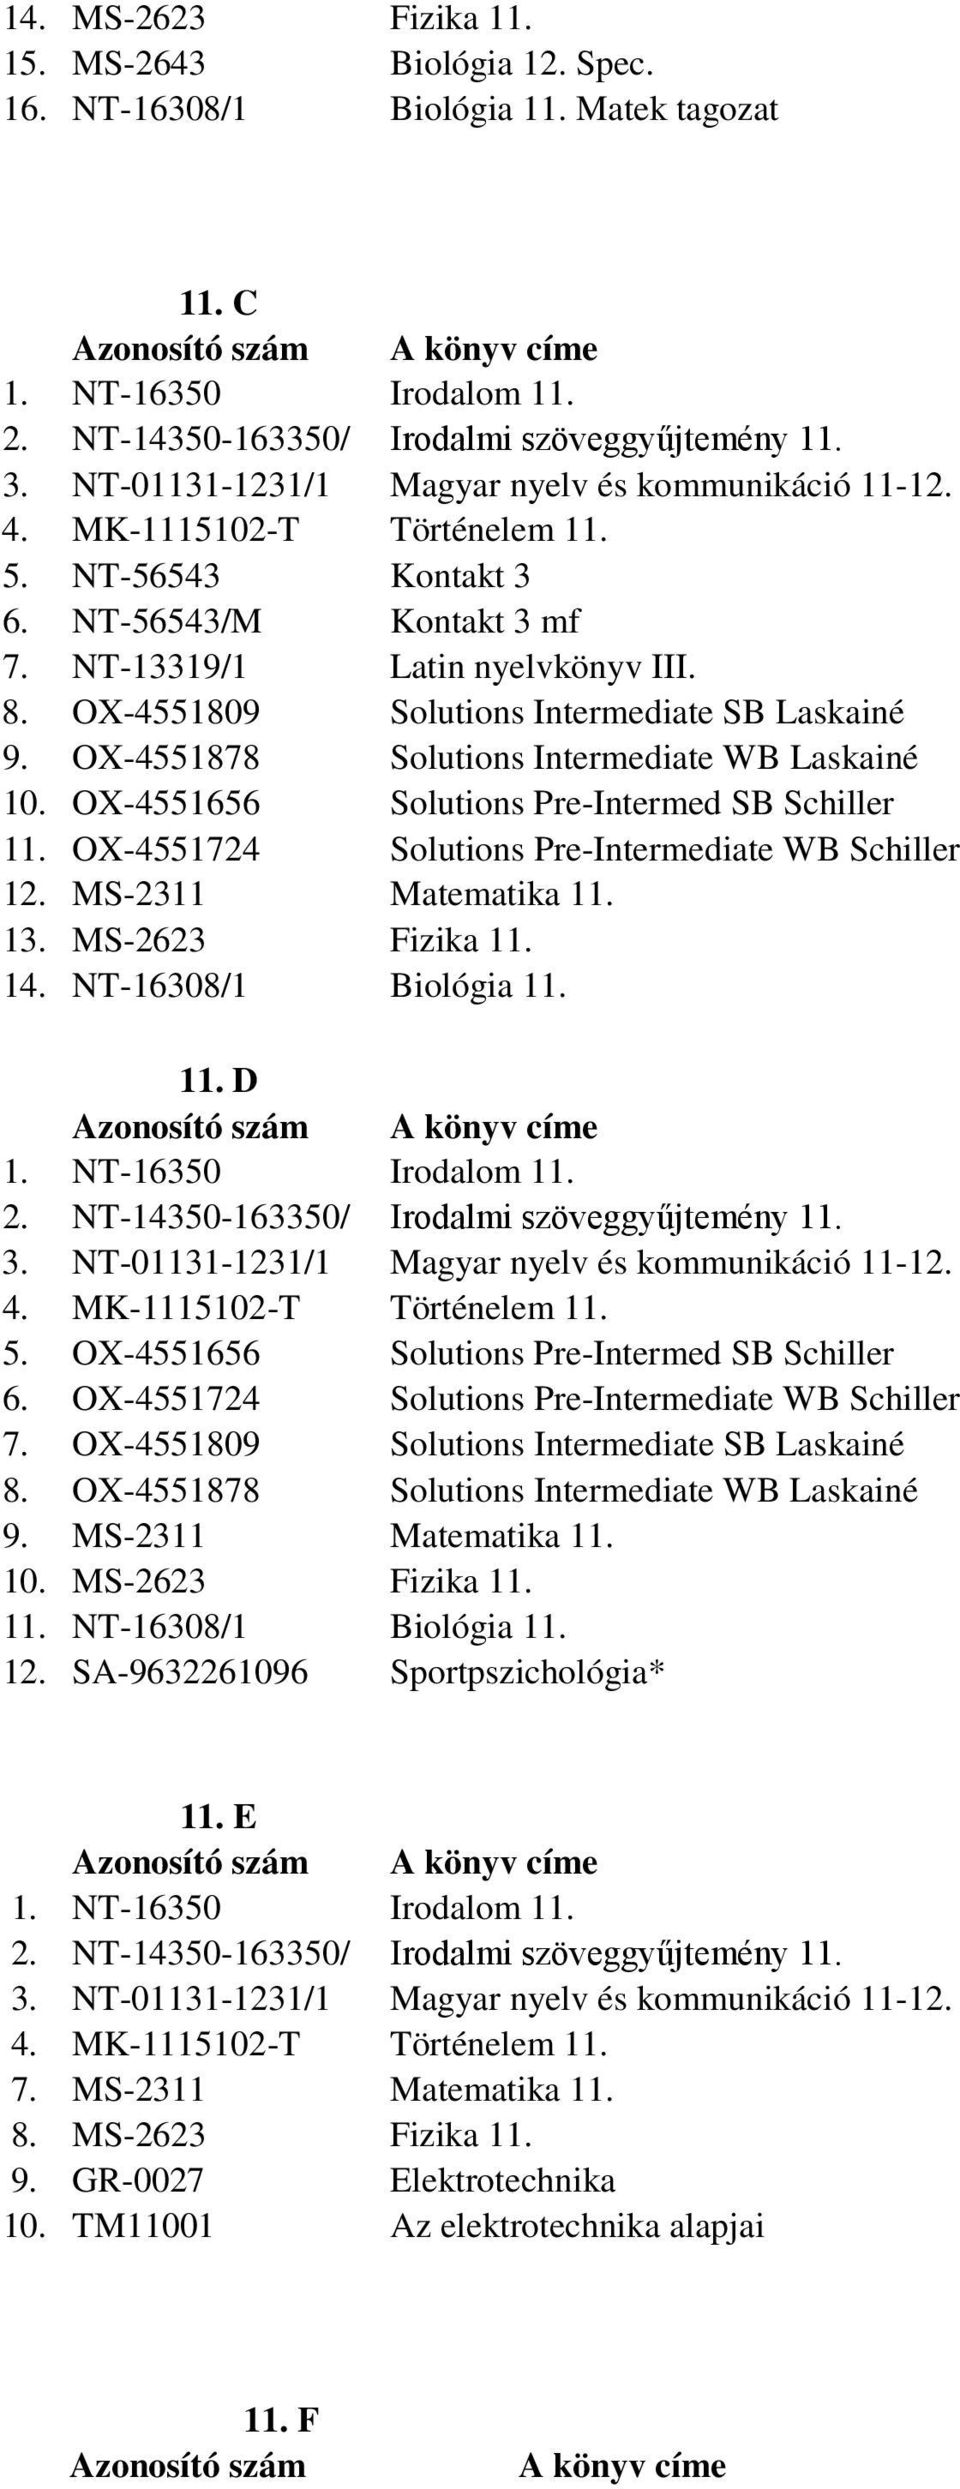 OX-4551724 Solutions Pre-Intermediate WB Schiller 1 MS-2311 Matematika 11. 13. MS-2623 Fizika 11. 14. NT-16308/1 Biológia 11. 11. D 5. OX-4551656 Solutions Pre-Intermed SB Schiller 6.